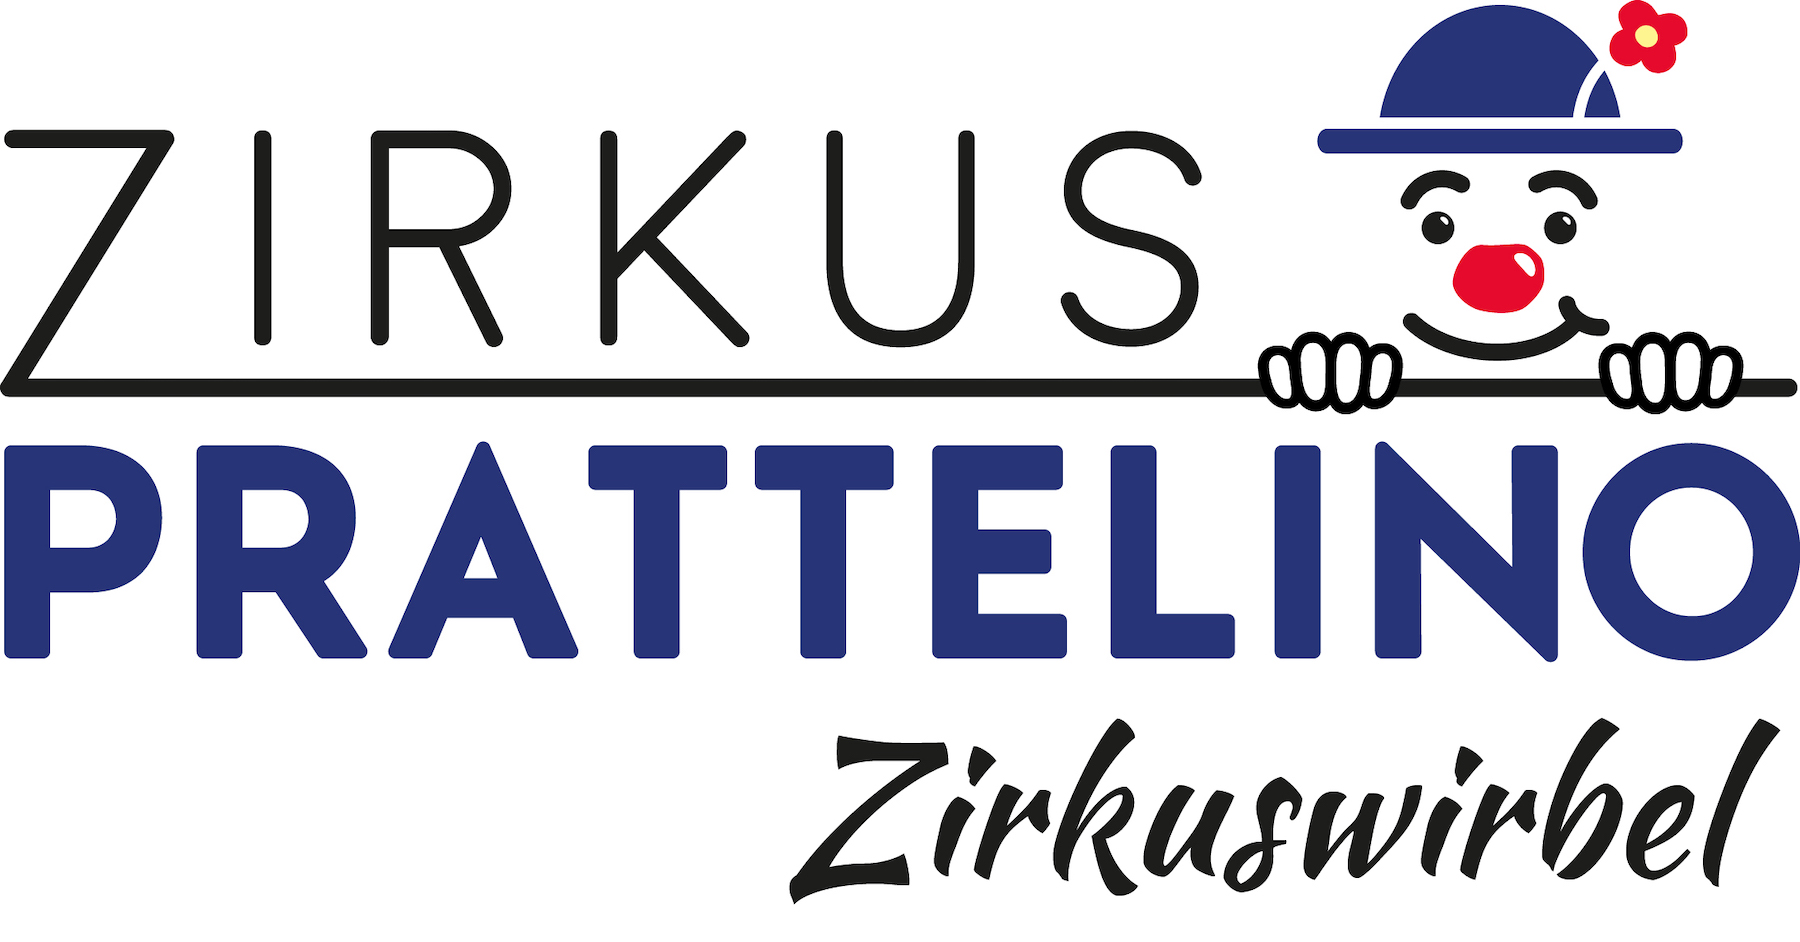 Prattelino_Zirkuswirbel Logo 2021 - RGB.jpg